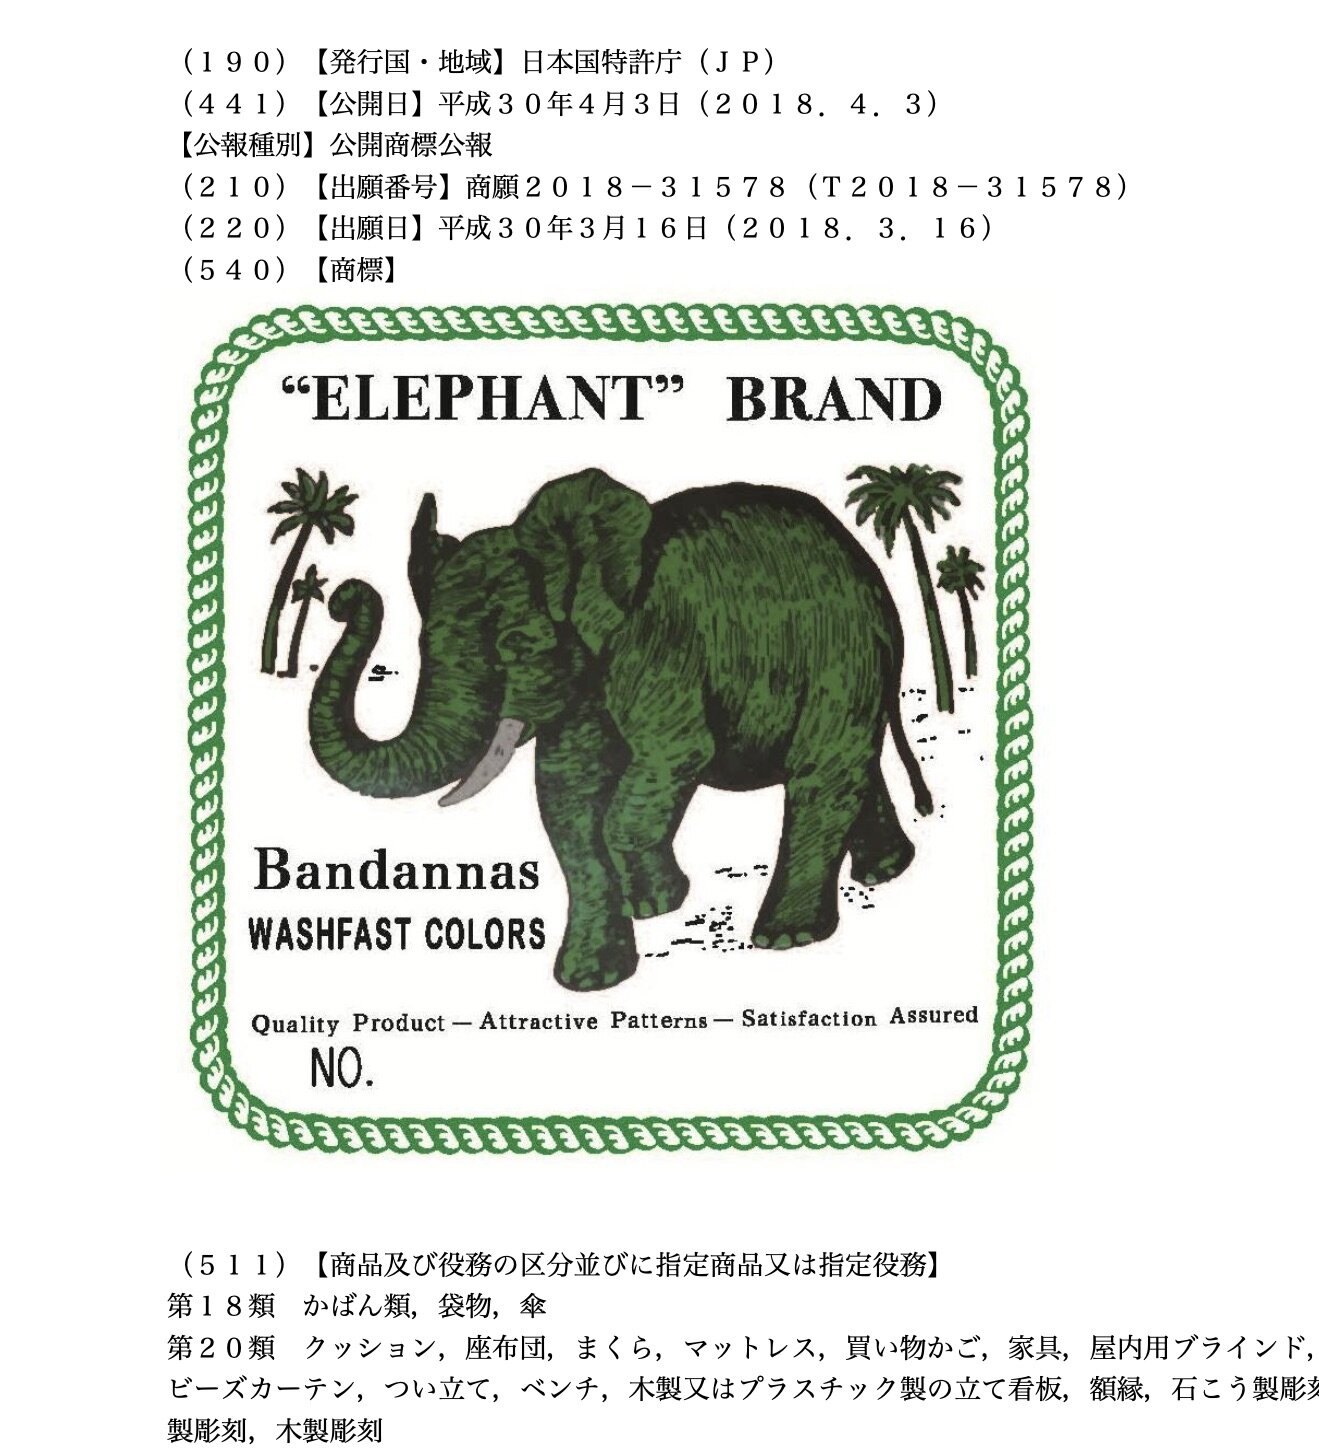 The American Bandanna - The Elephant Brand — The Bandanna Almanac